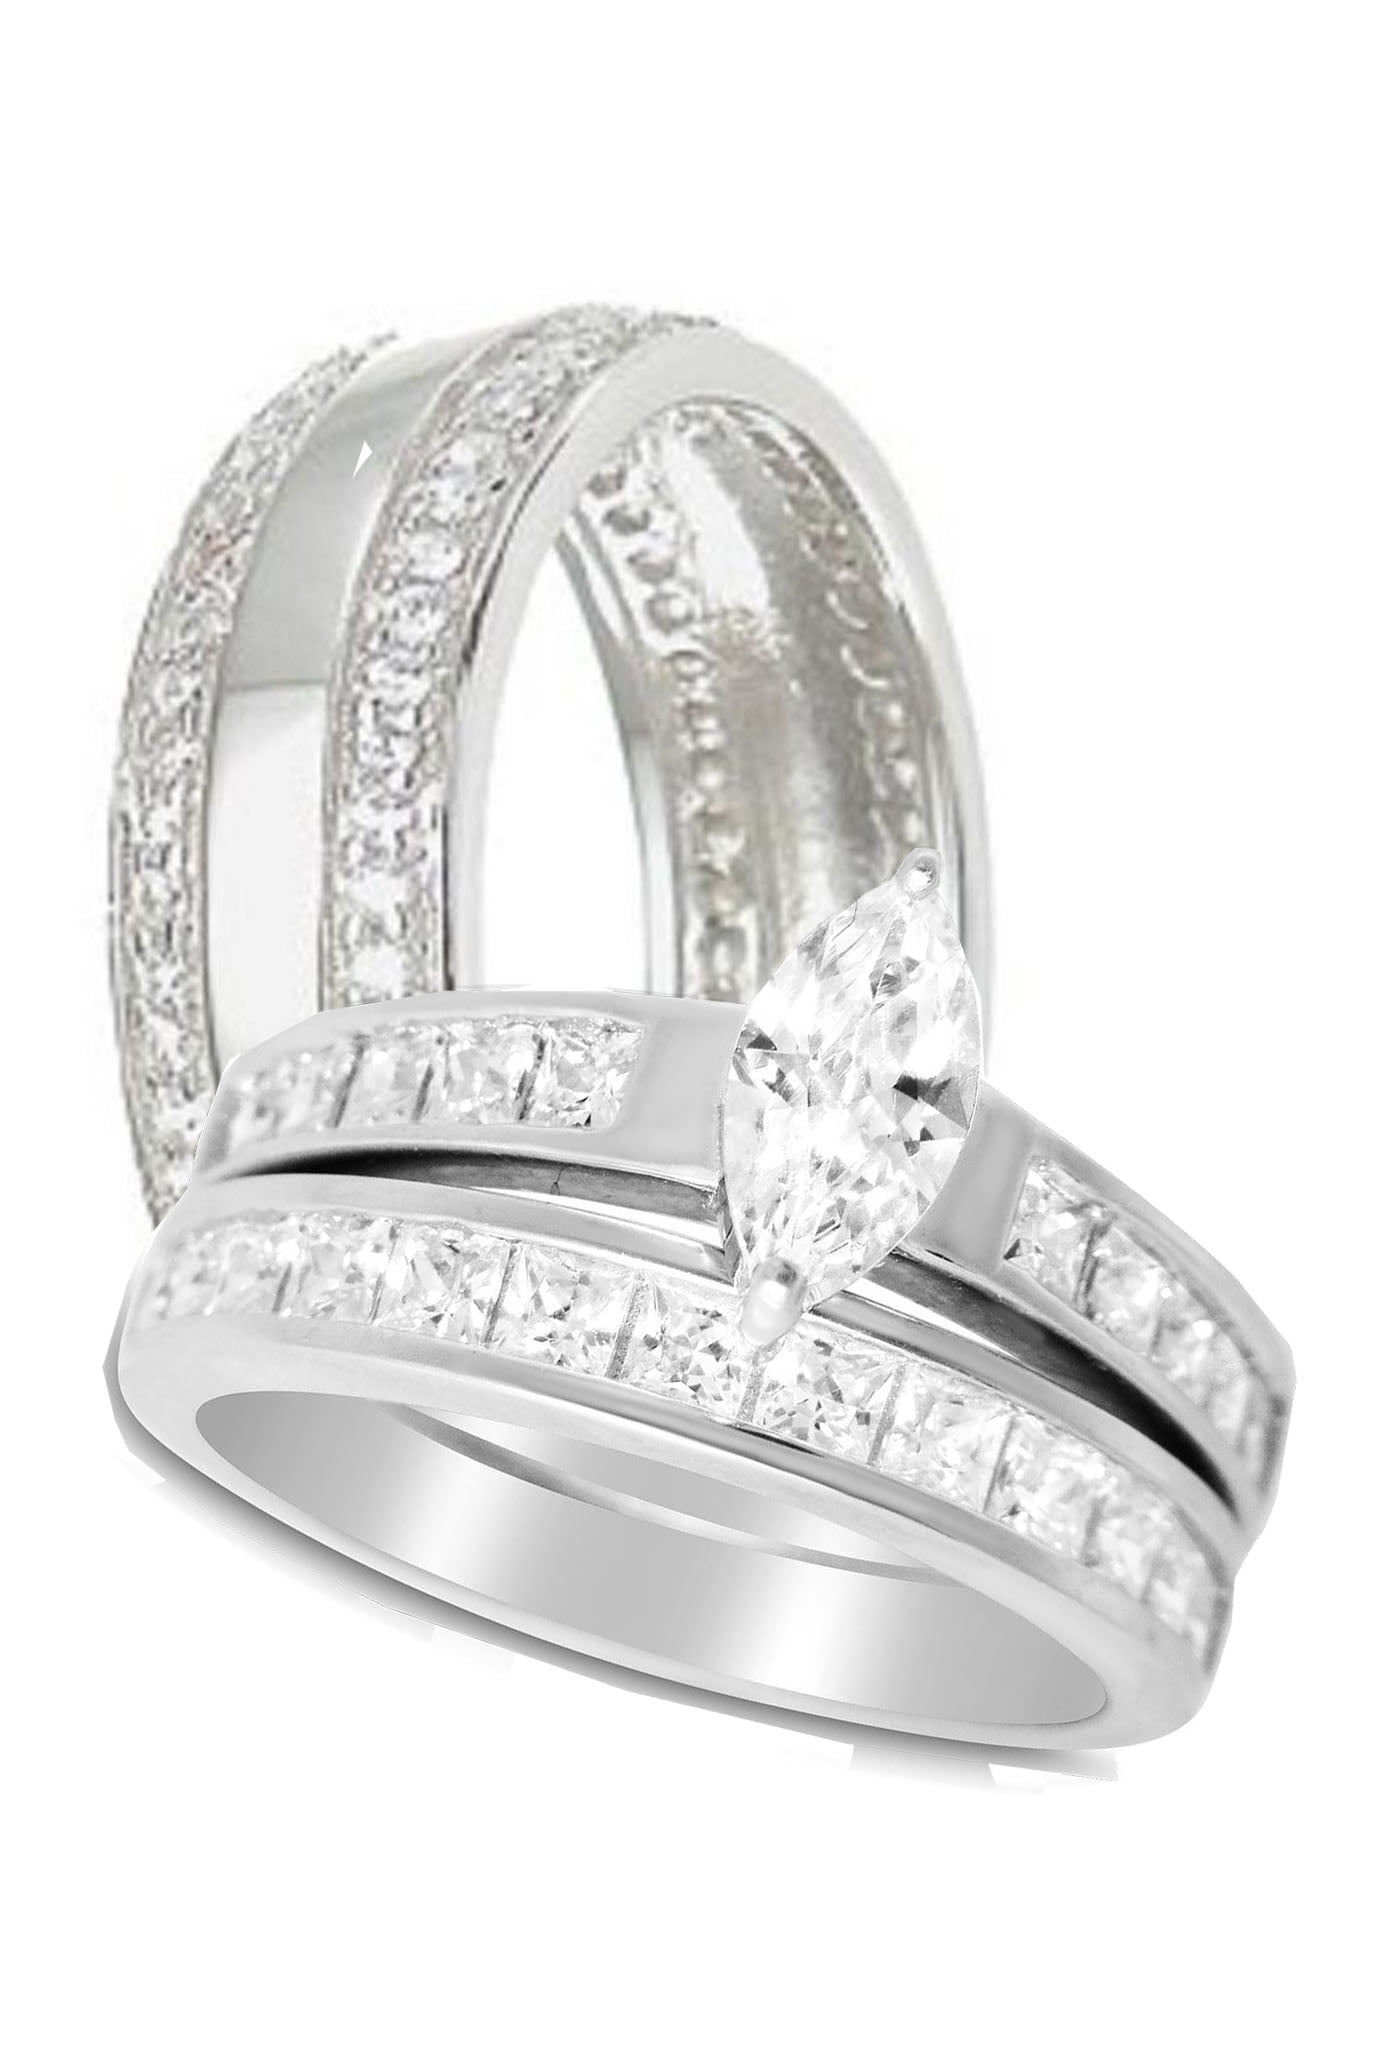 LaRaso & Co His Hers Wedding Ring Set Matching Sterling